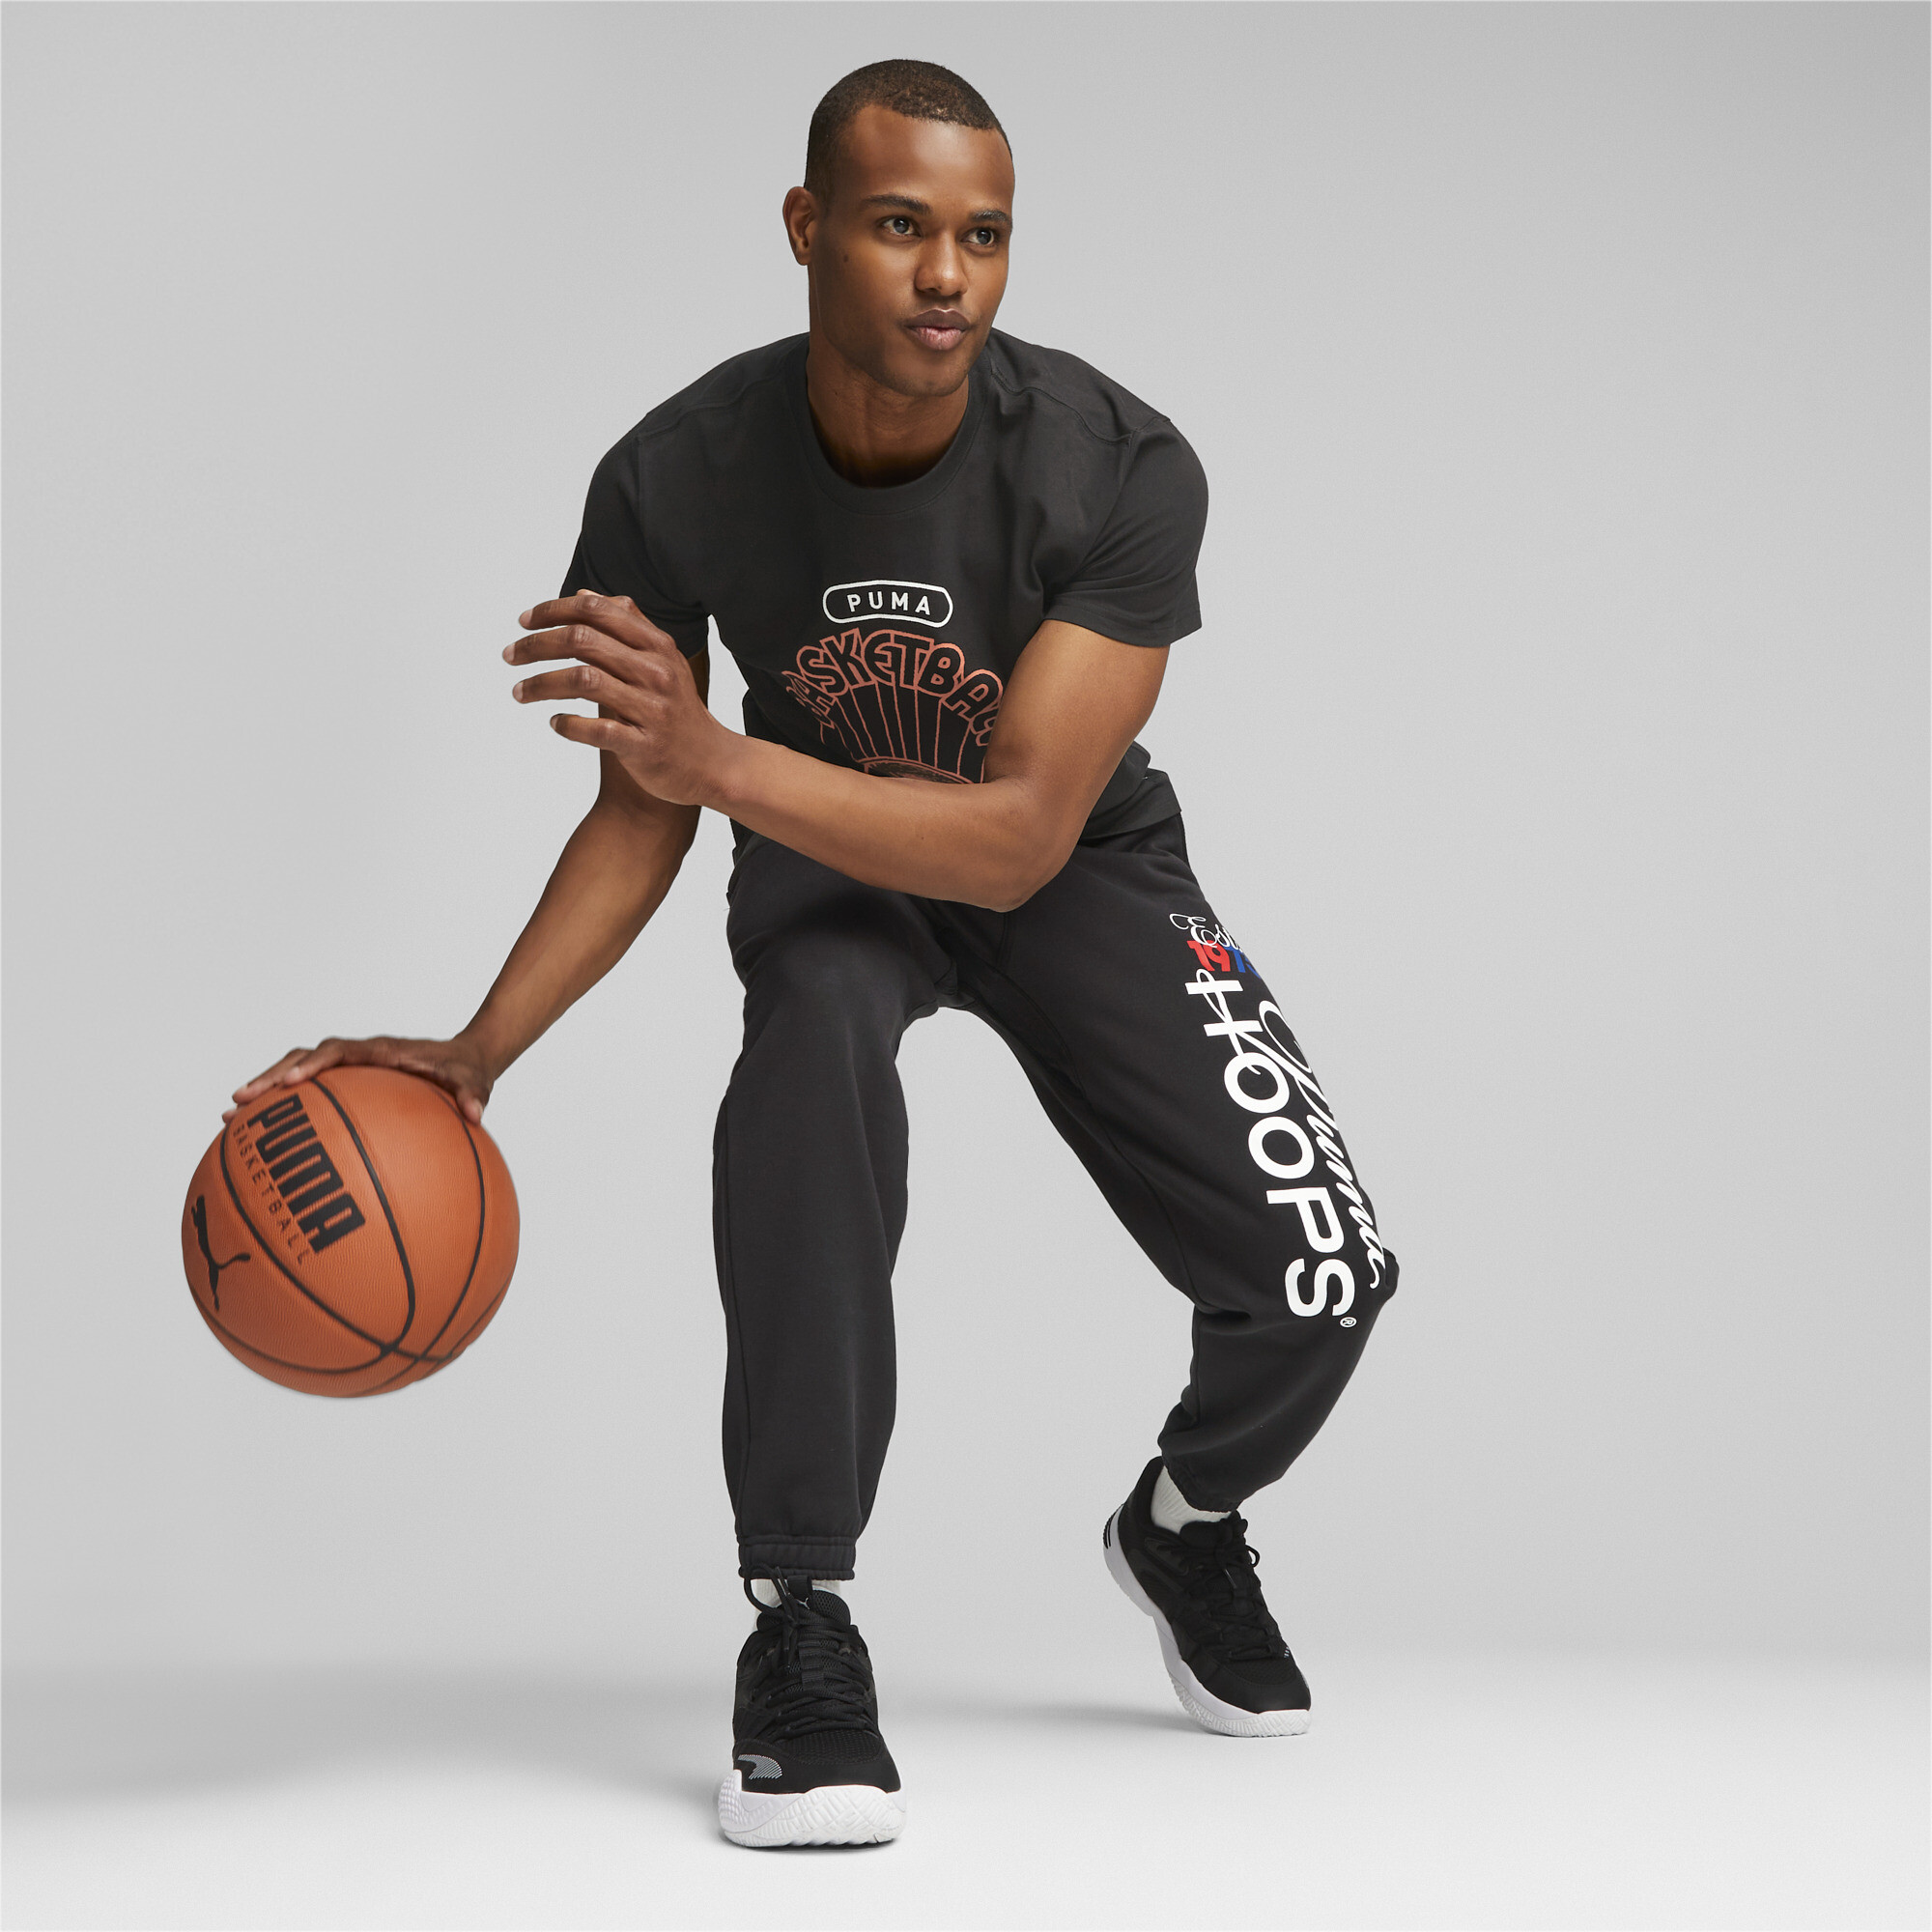 Men's Puma Franchise's Basketball Graphic T-Shirt, Black, Size S, Clothing